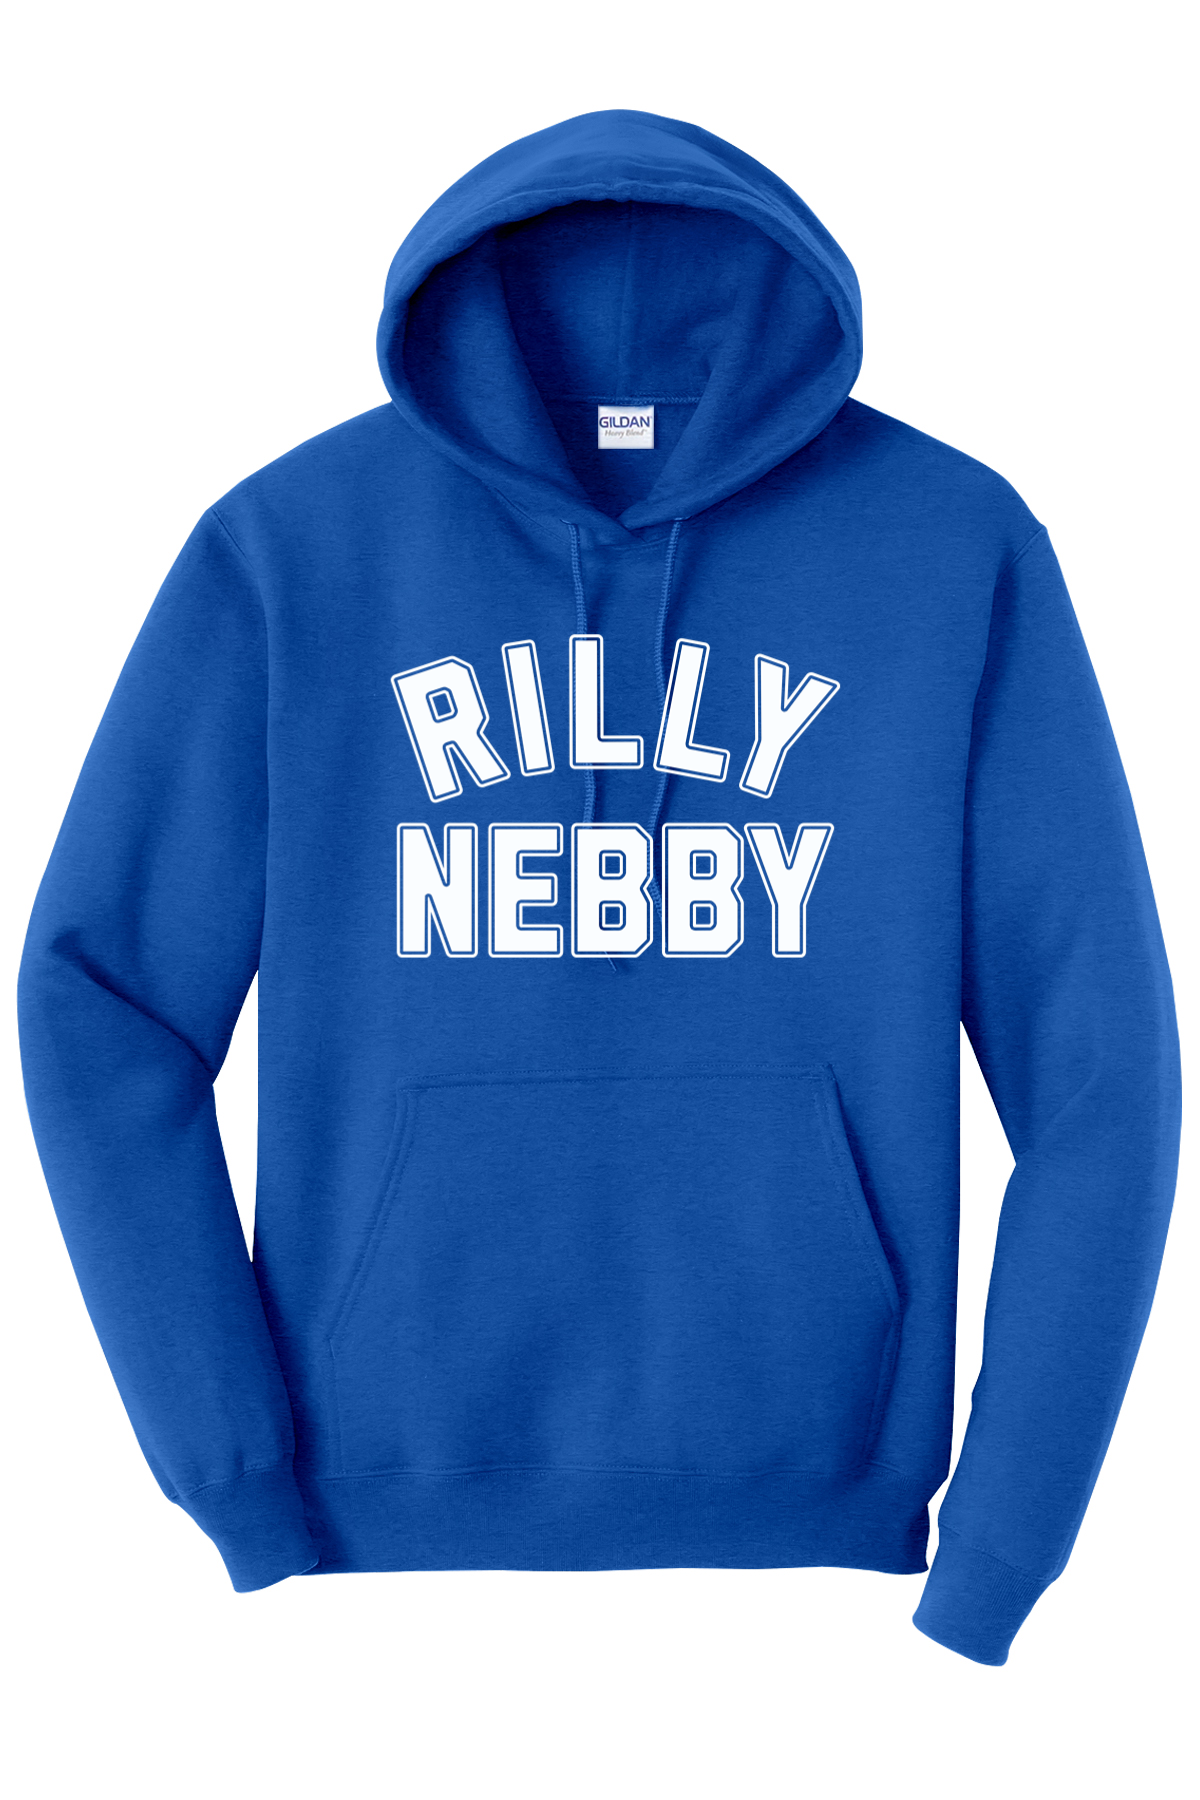 Rilly Nebby - Hoodie - Yinzylvania